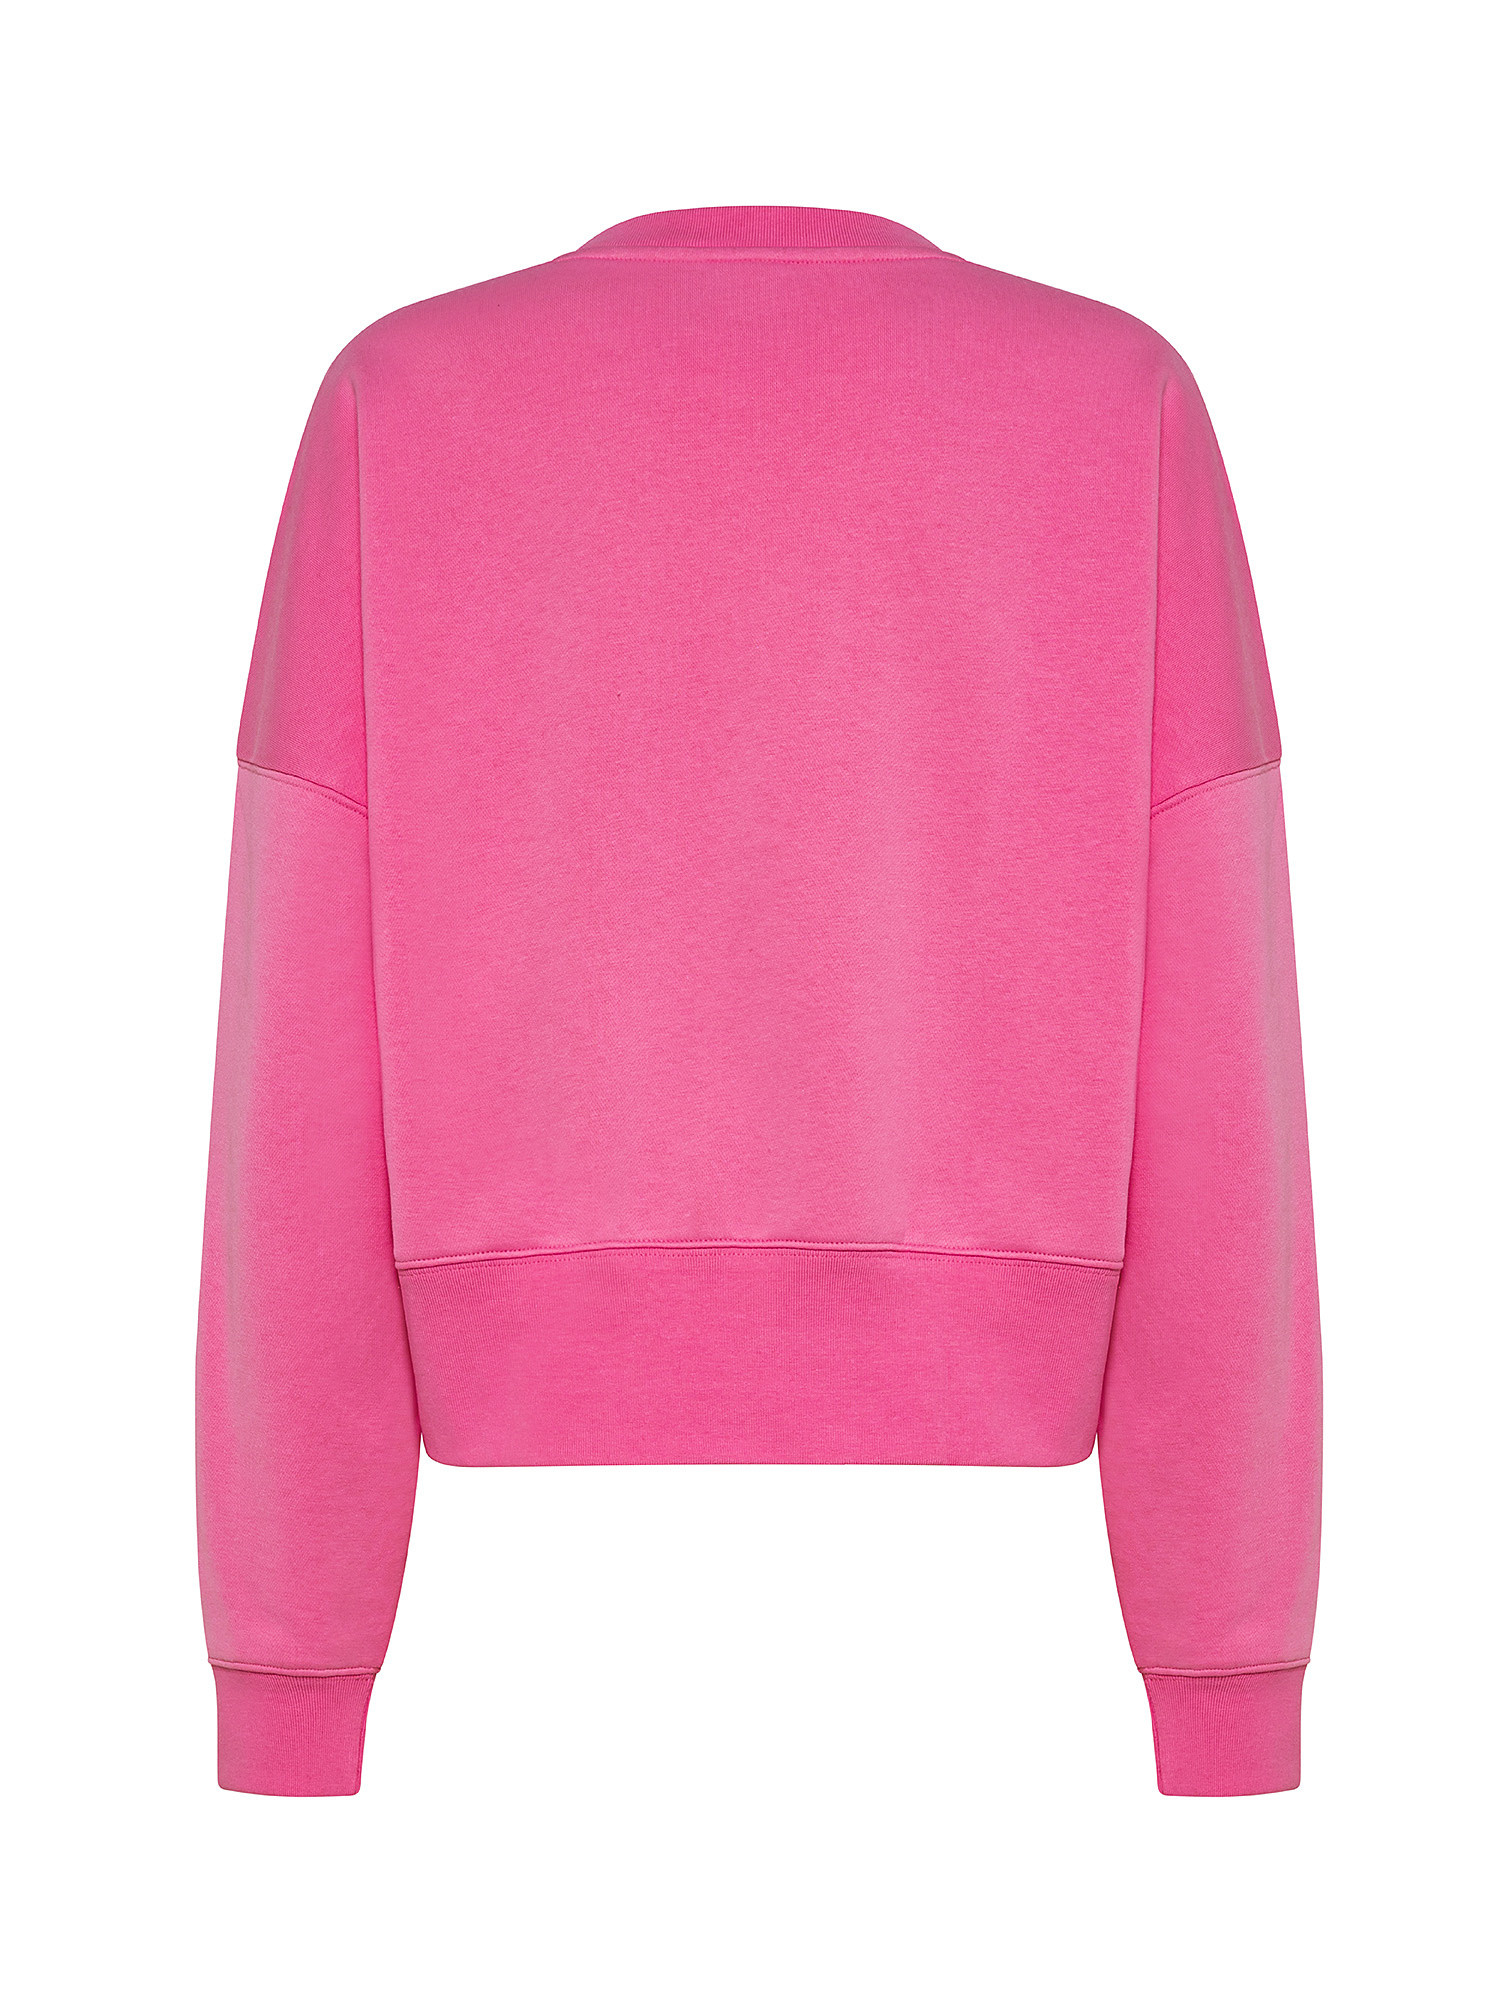 Adidas - Sweatshirt with logo, Pink, large image number 1